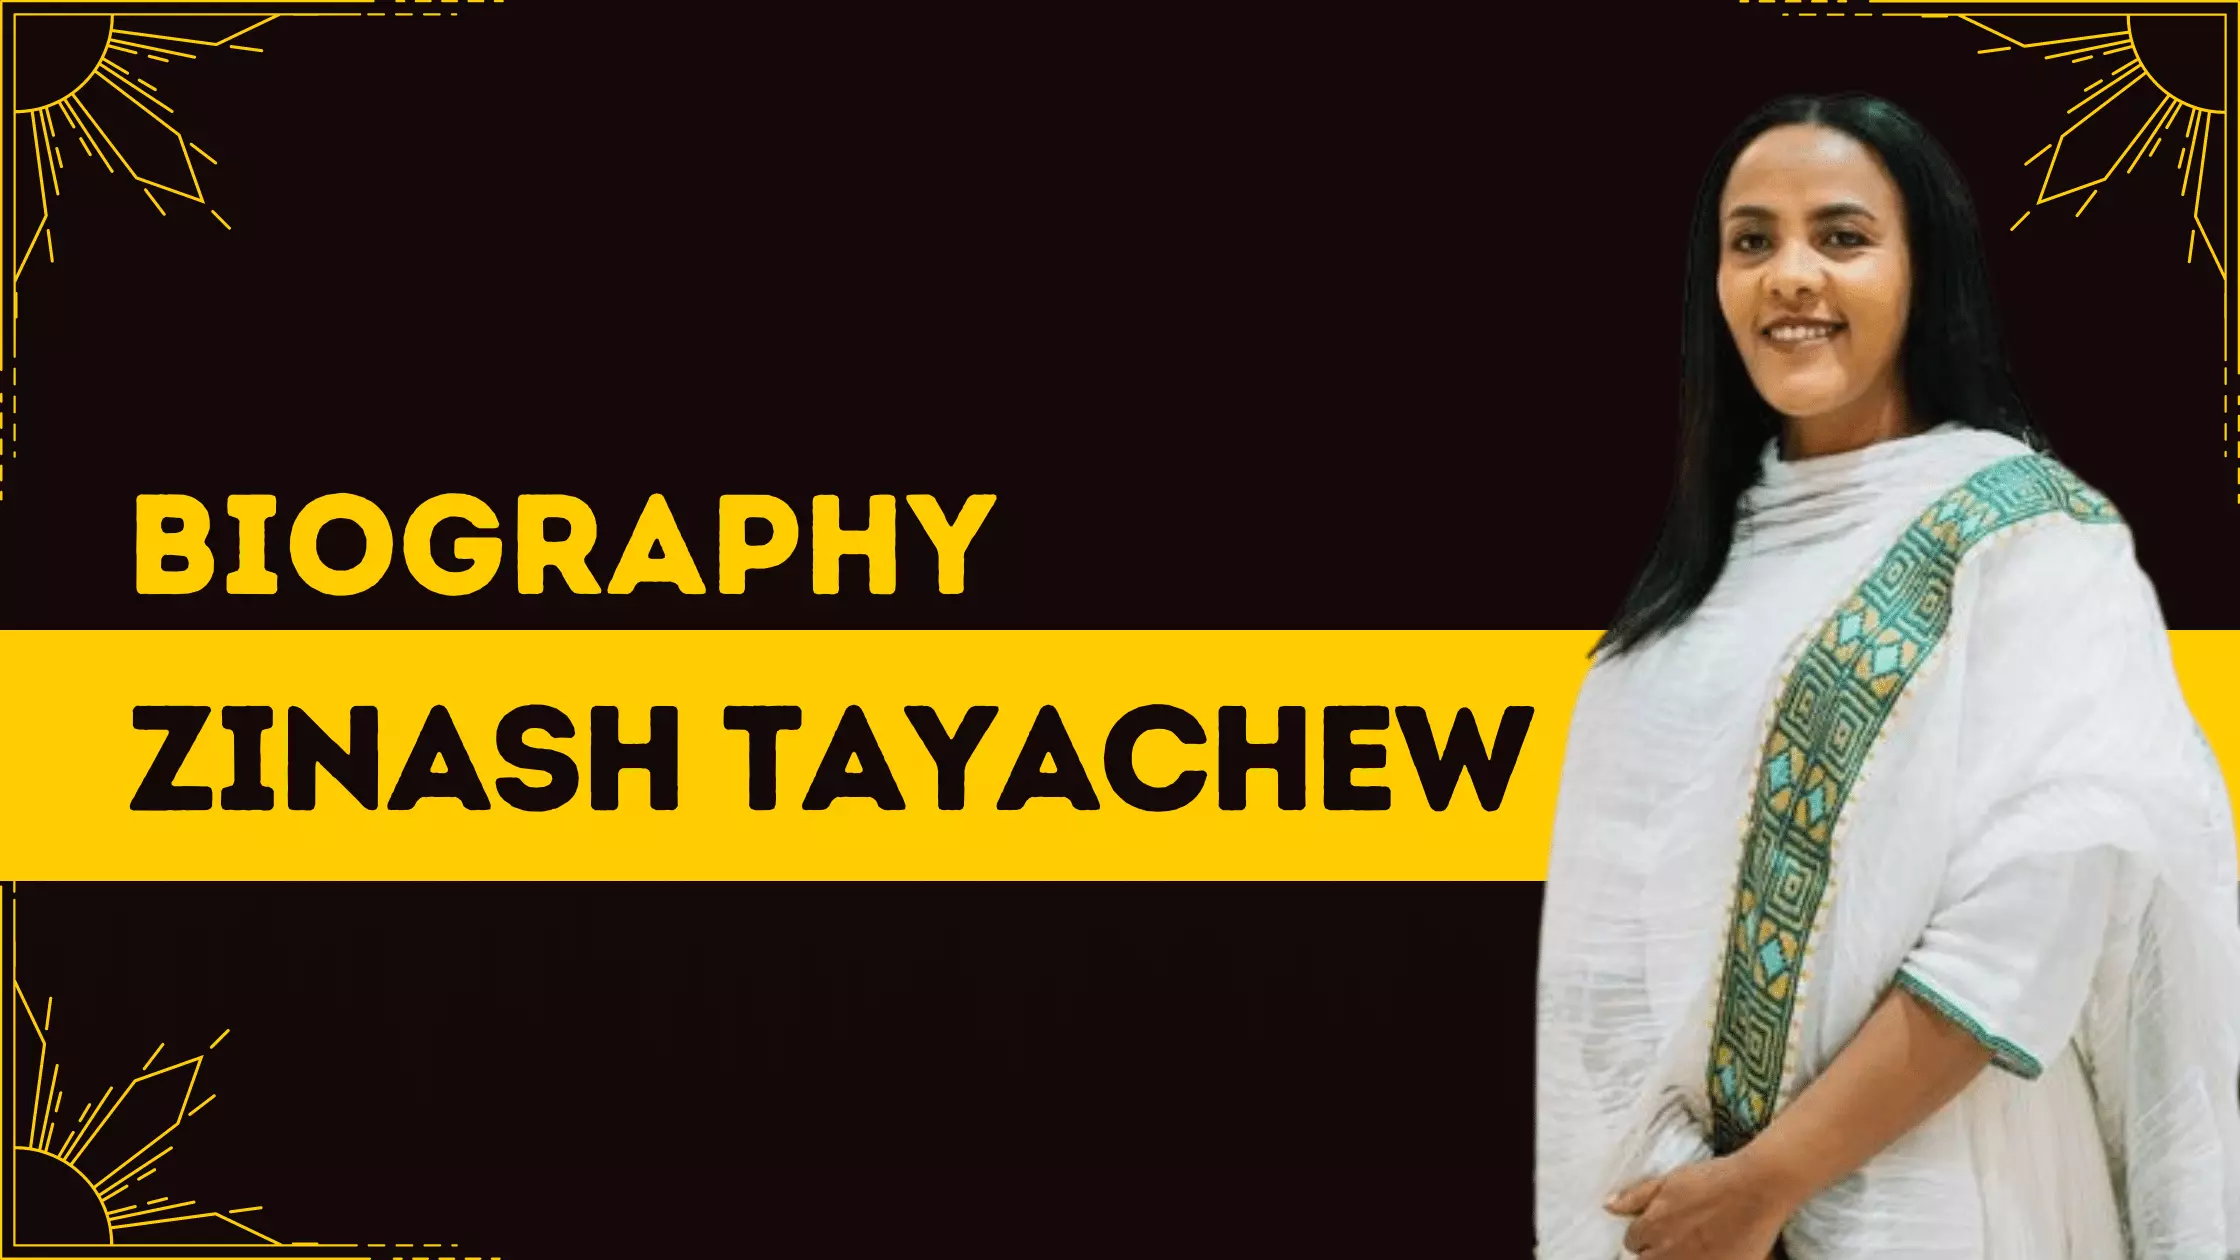 Zinash Tayachew biography